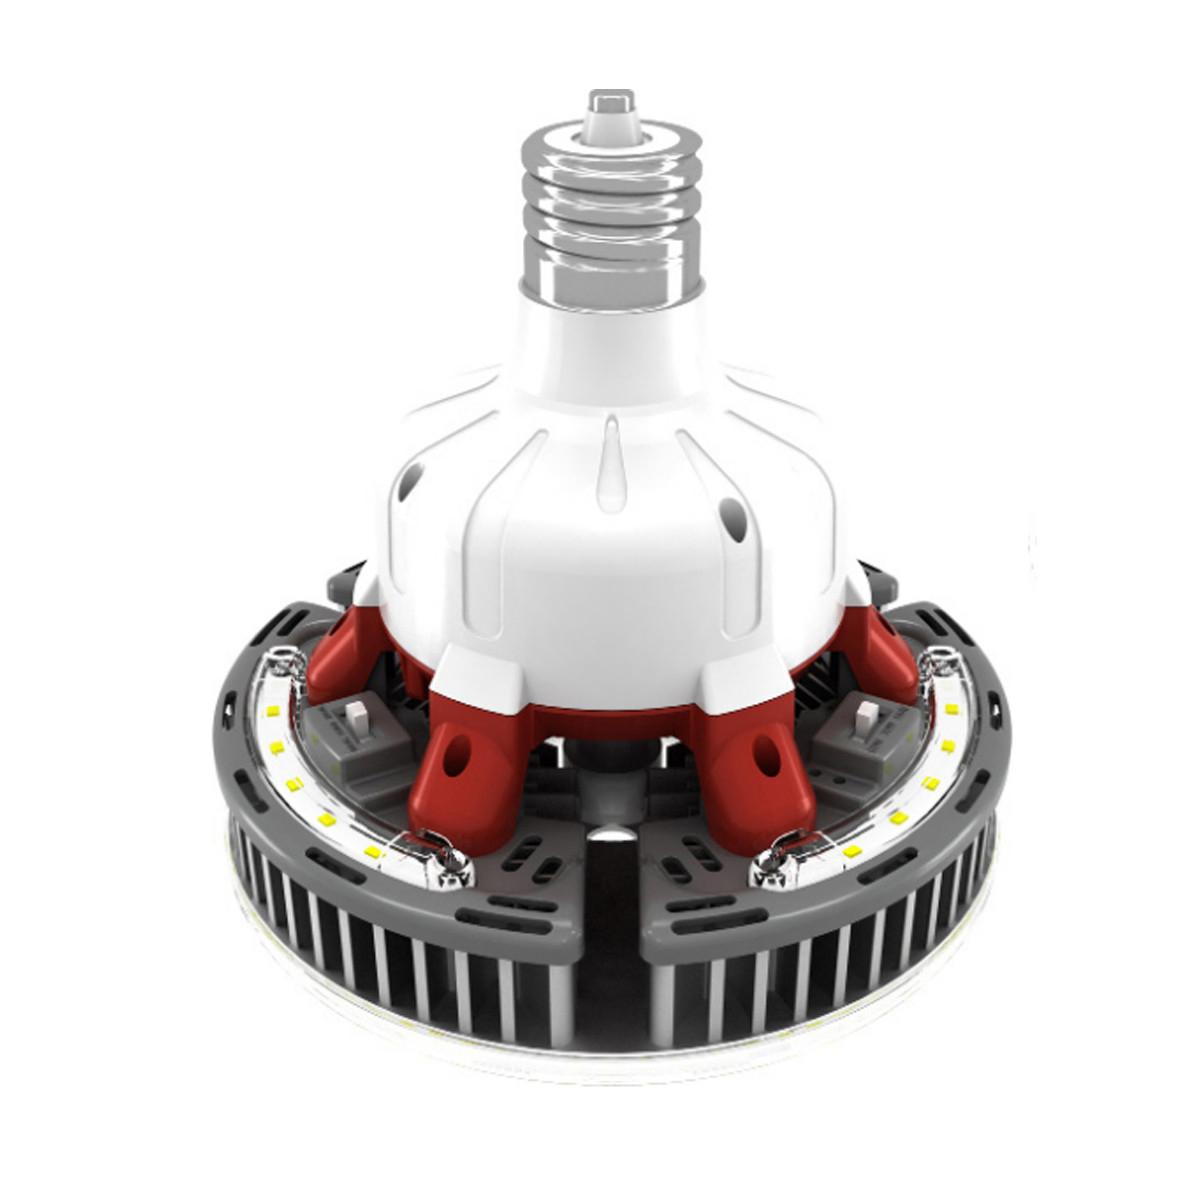 Retrofit LED High Bay Bulb, 115W, 17136 Lumens, Selectable CCT, 30K/40K/50K, EX39 Mogul Extended Base, 120-277V